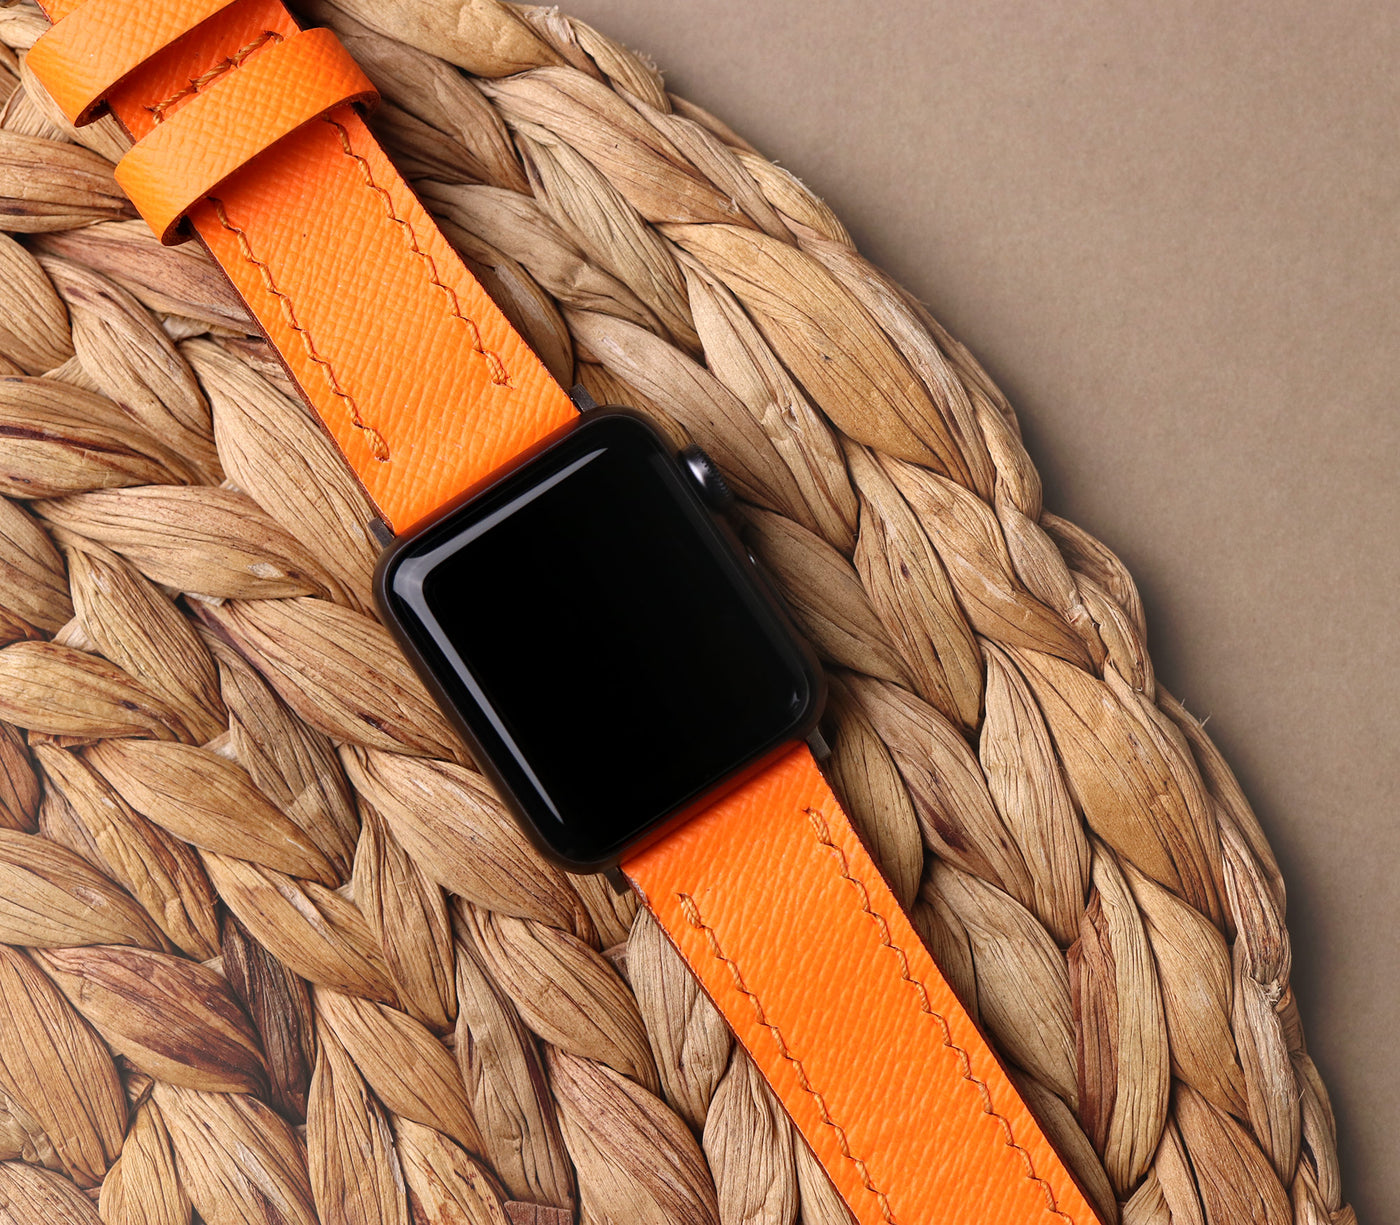 Custom Made Apple Watch Strap - Orange Saffiano